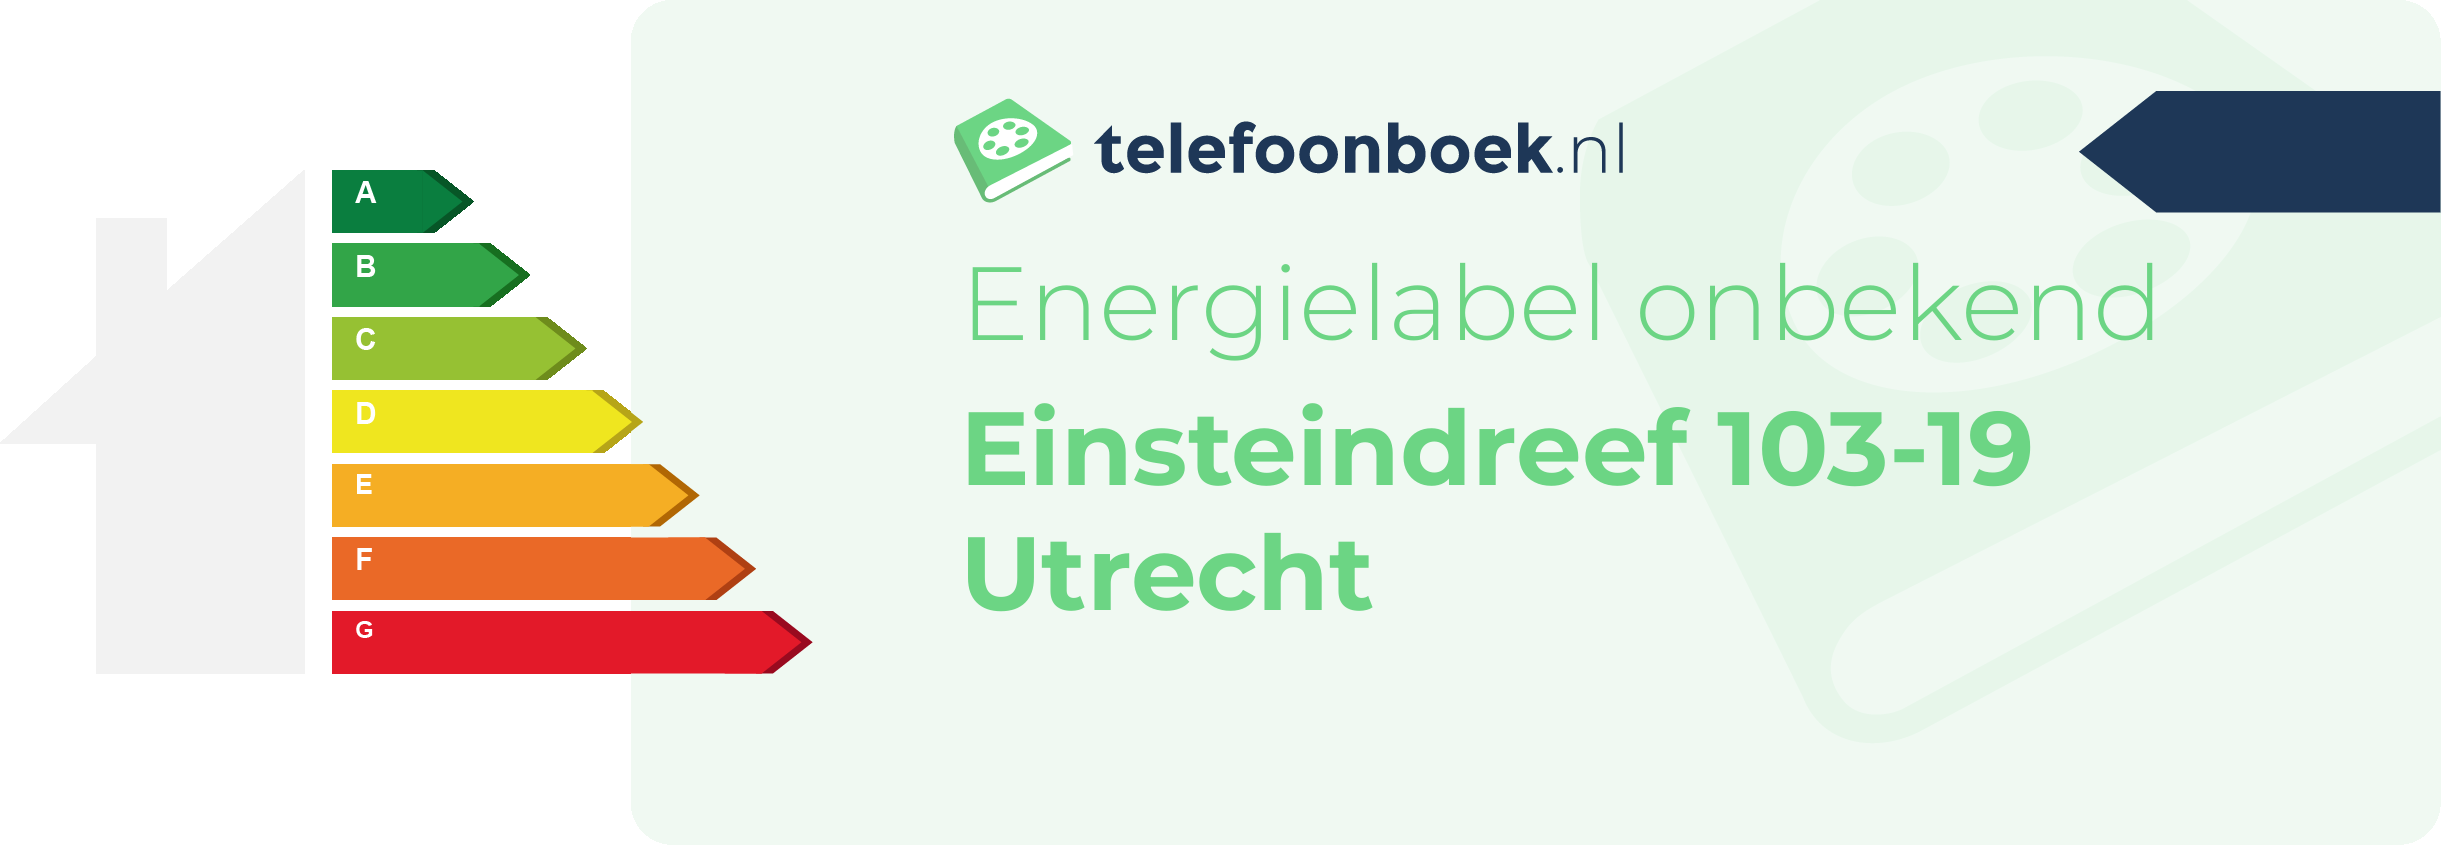 Energielabel Einsteindreef 103-19 Utrecht